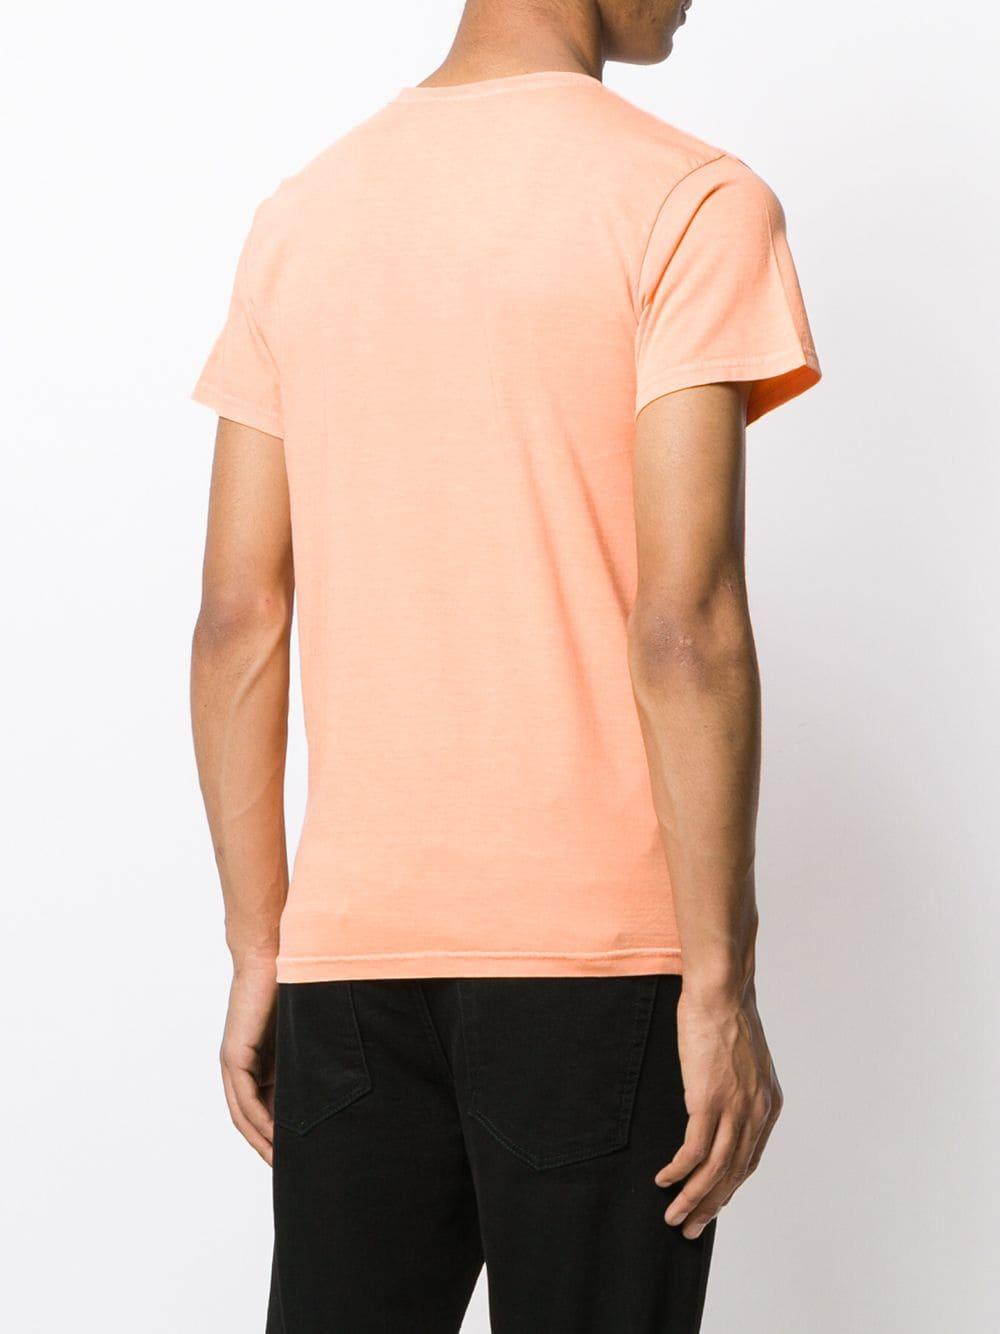 Stussy Logo Print Crew Neck T-shirt in Orange for Men - Lyst